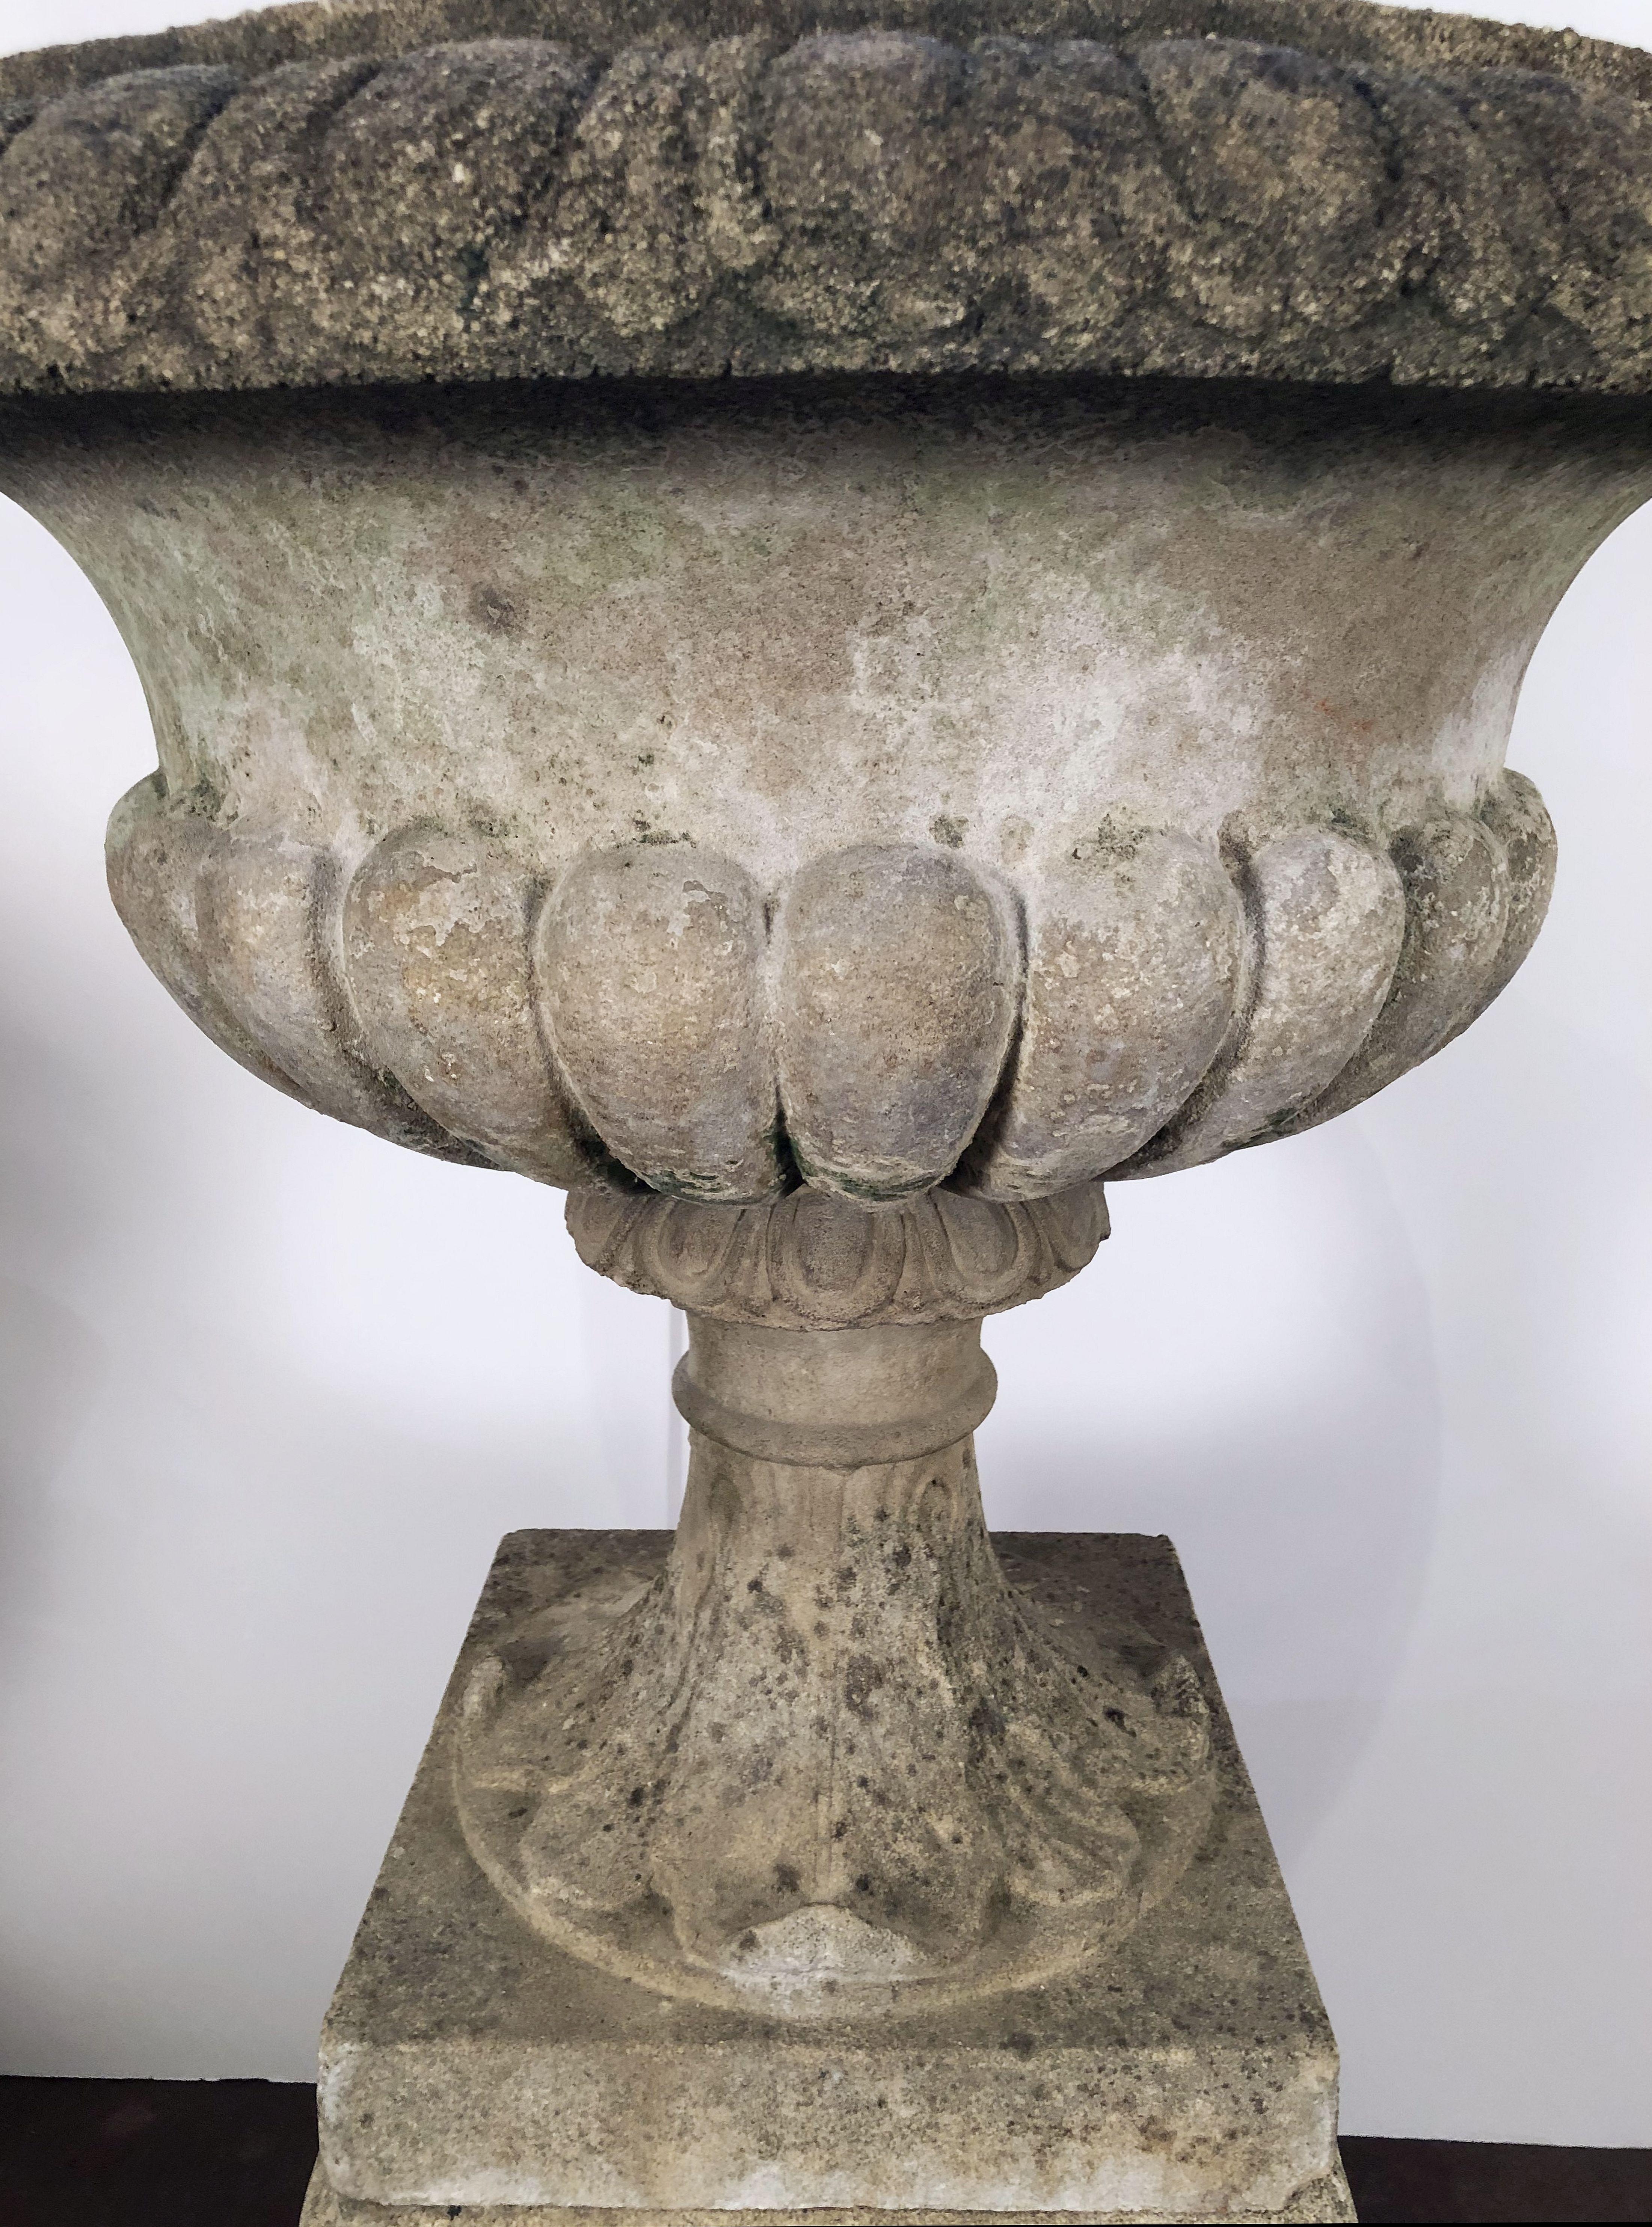 20th Century Large English Garden Stone Urn or Planter Pot on Plinth or Pedestal